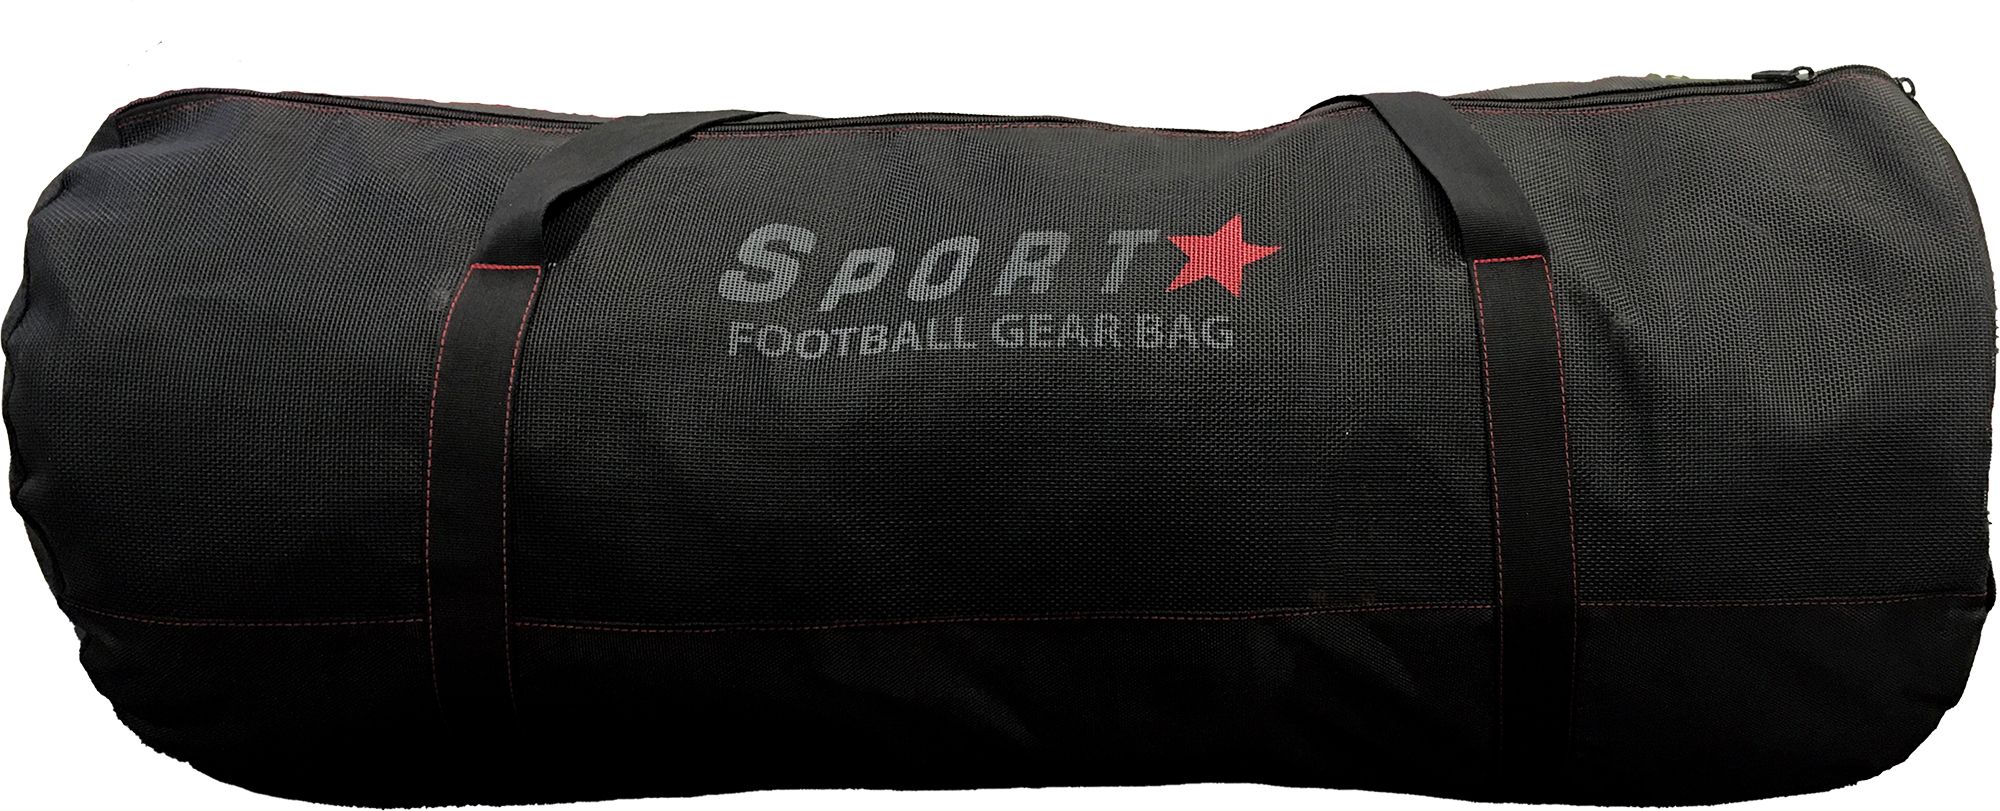 SportStar Football Gear Bag